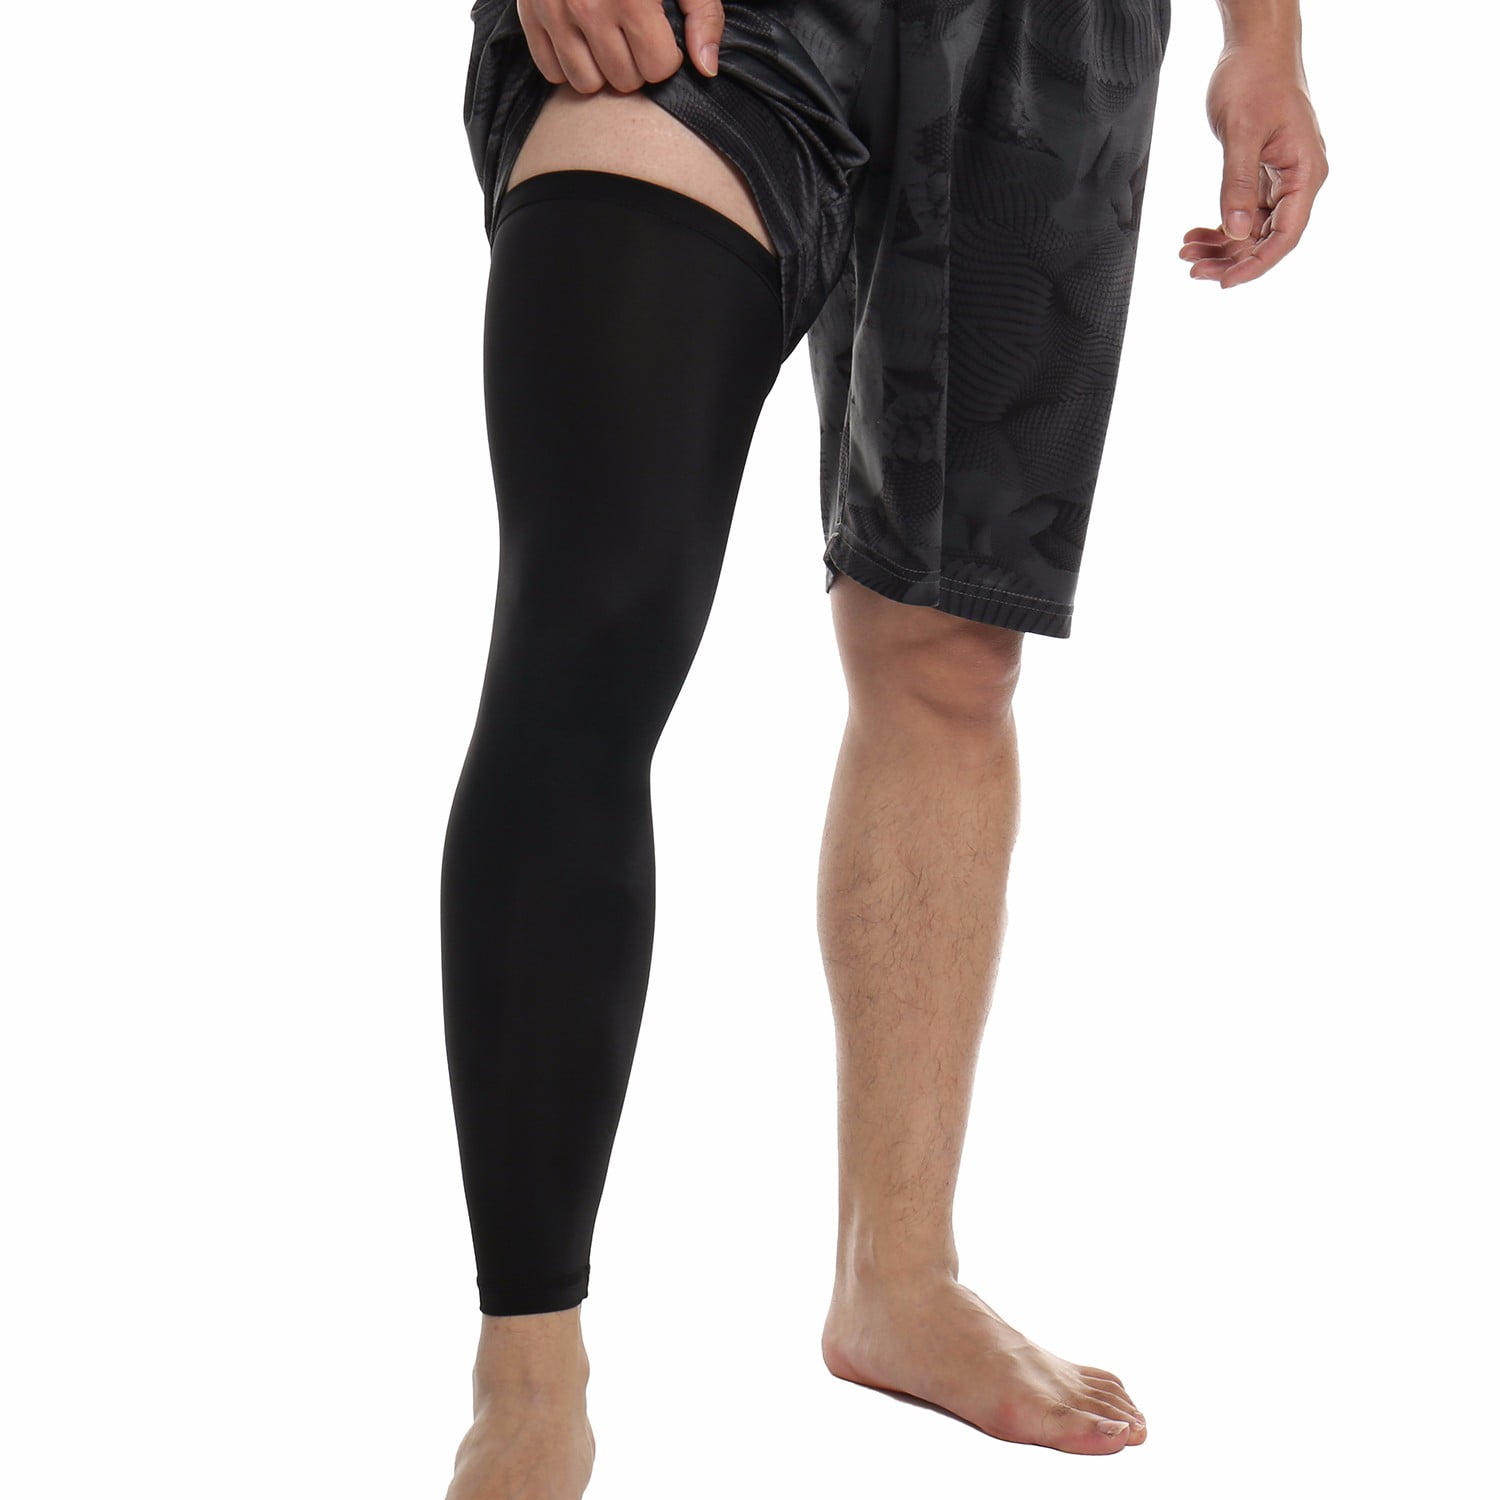 CFR Knee Support Calf Sleeve Compression Leg Brace Socks Basketball Sports 